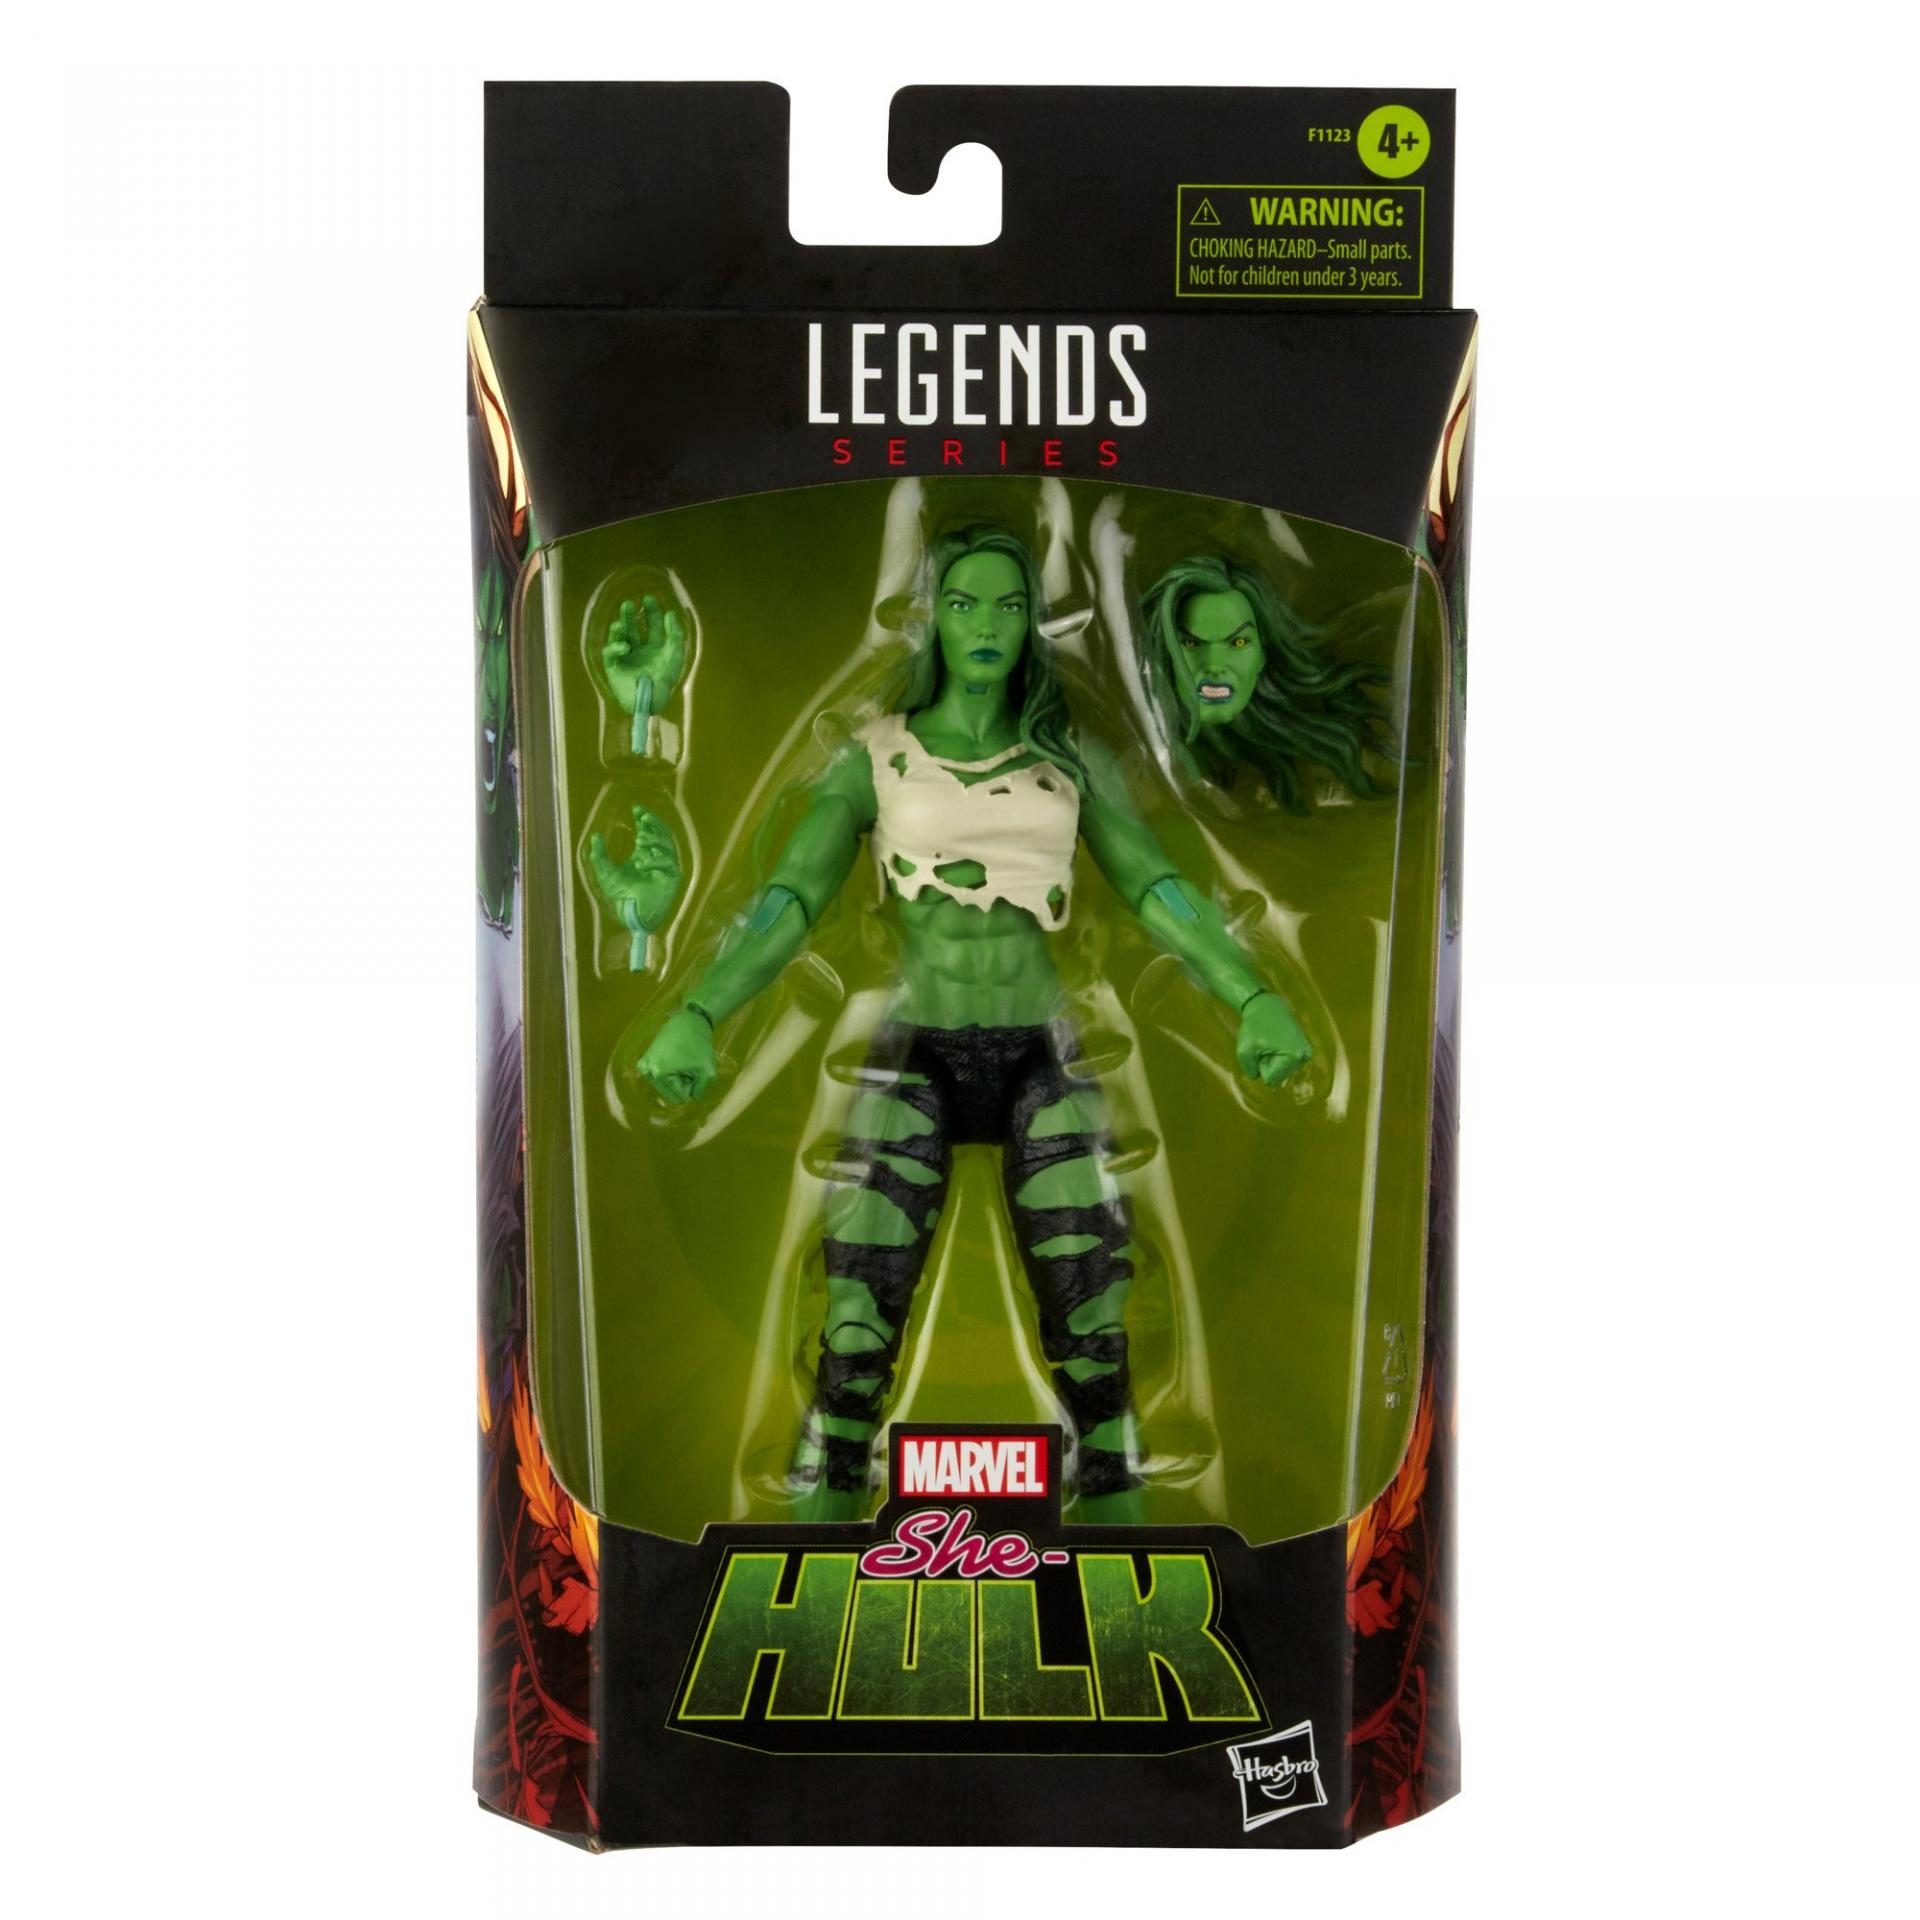 Marvel legends hasbro she hulk5